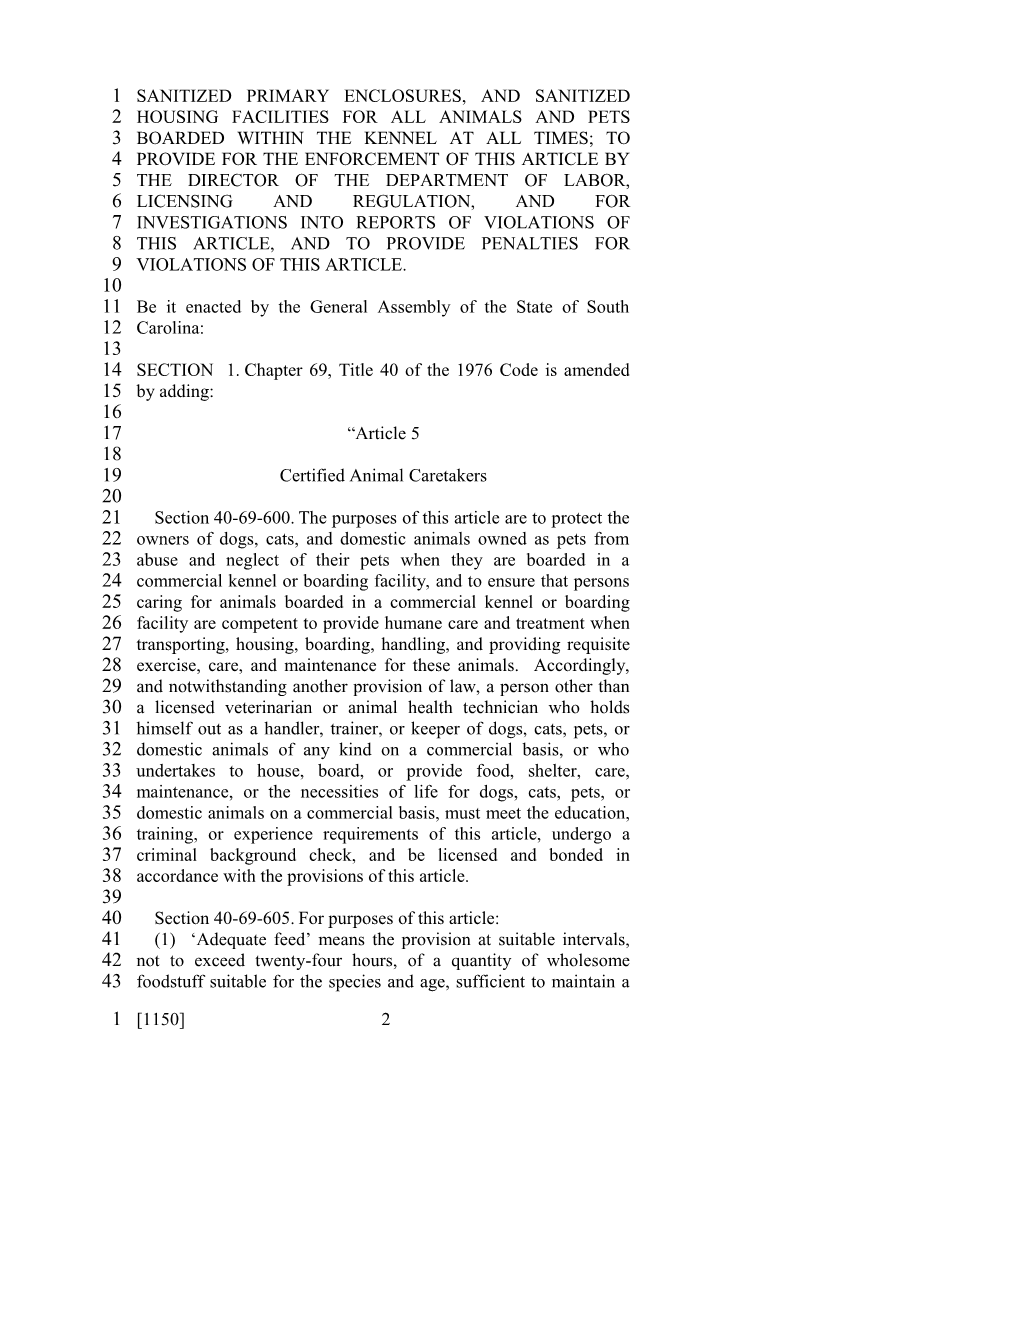 2001-2002 Bill 1150: Certified Animal Caretakers, Regulation of - South Carolina Legislature